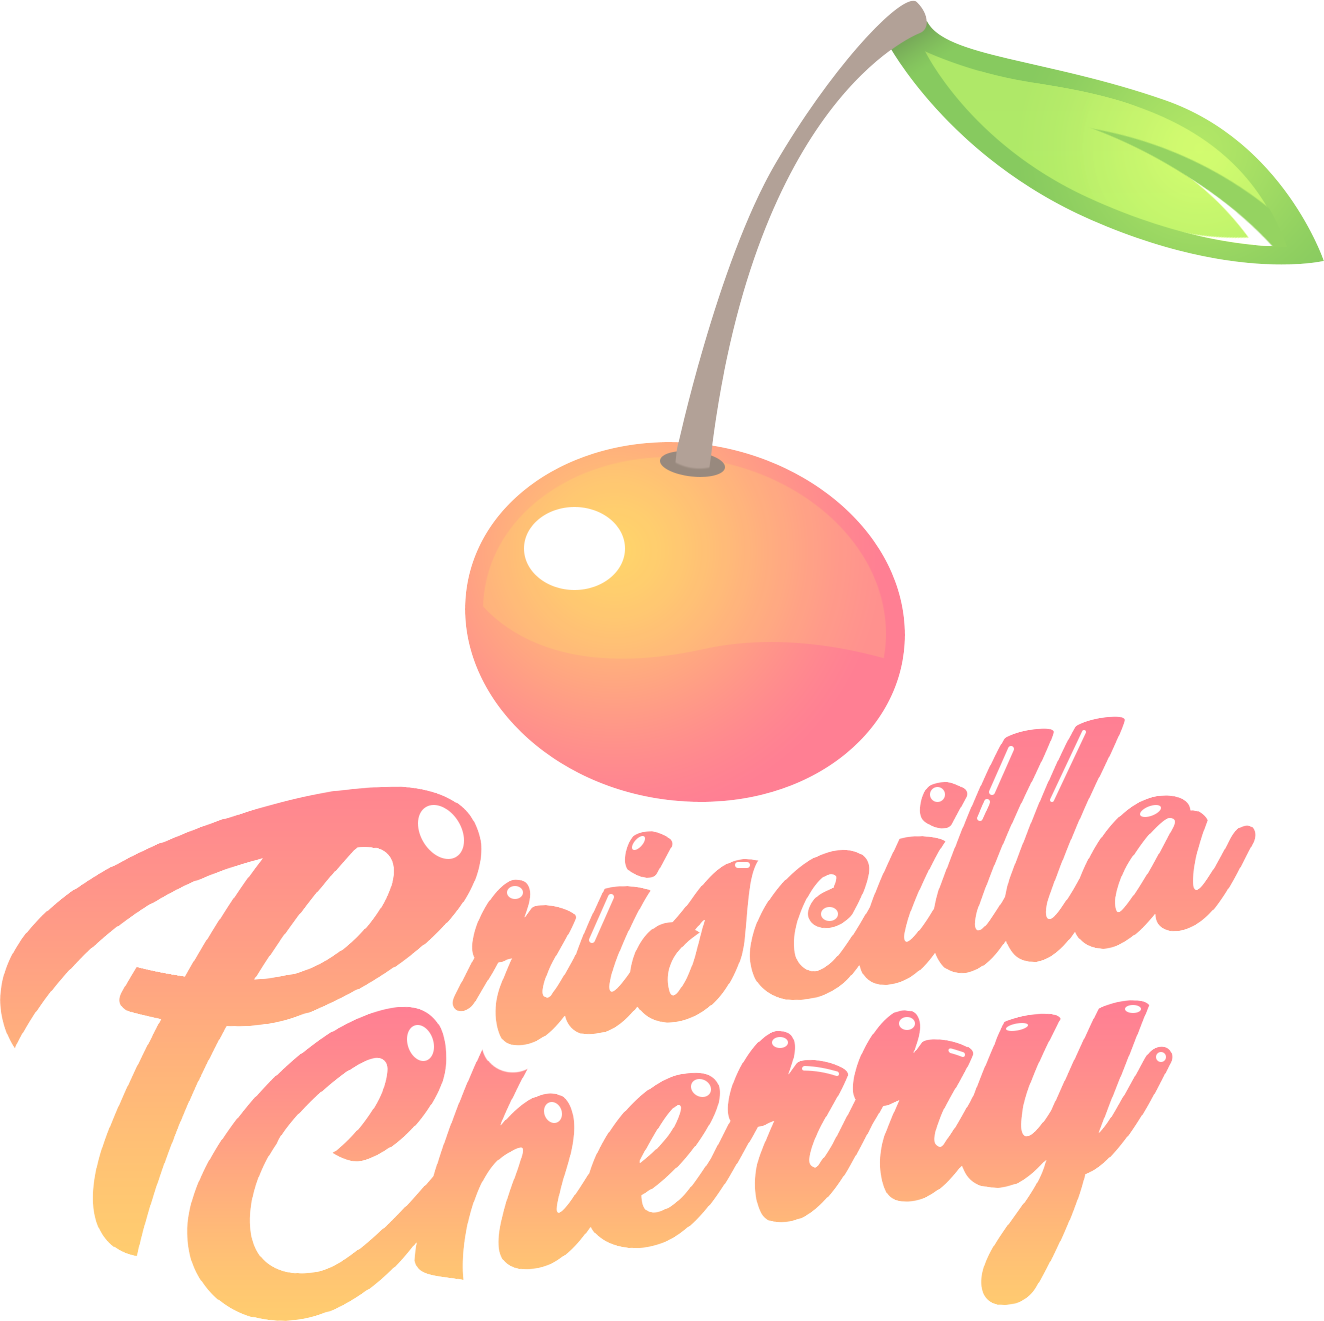 Priscilla cherry . Support clipart peer support